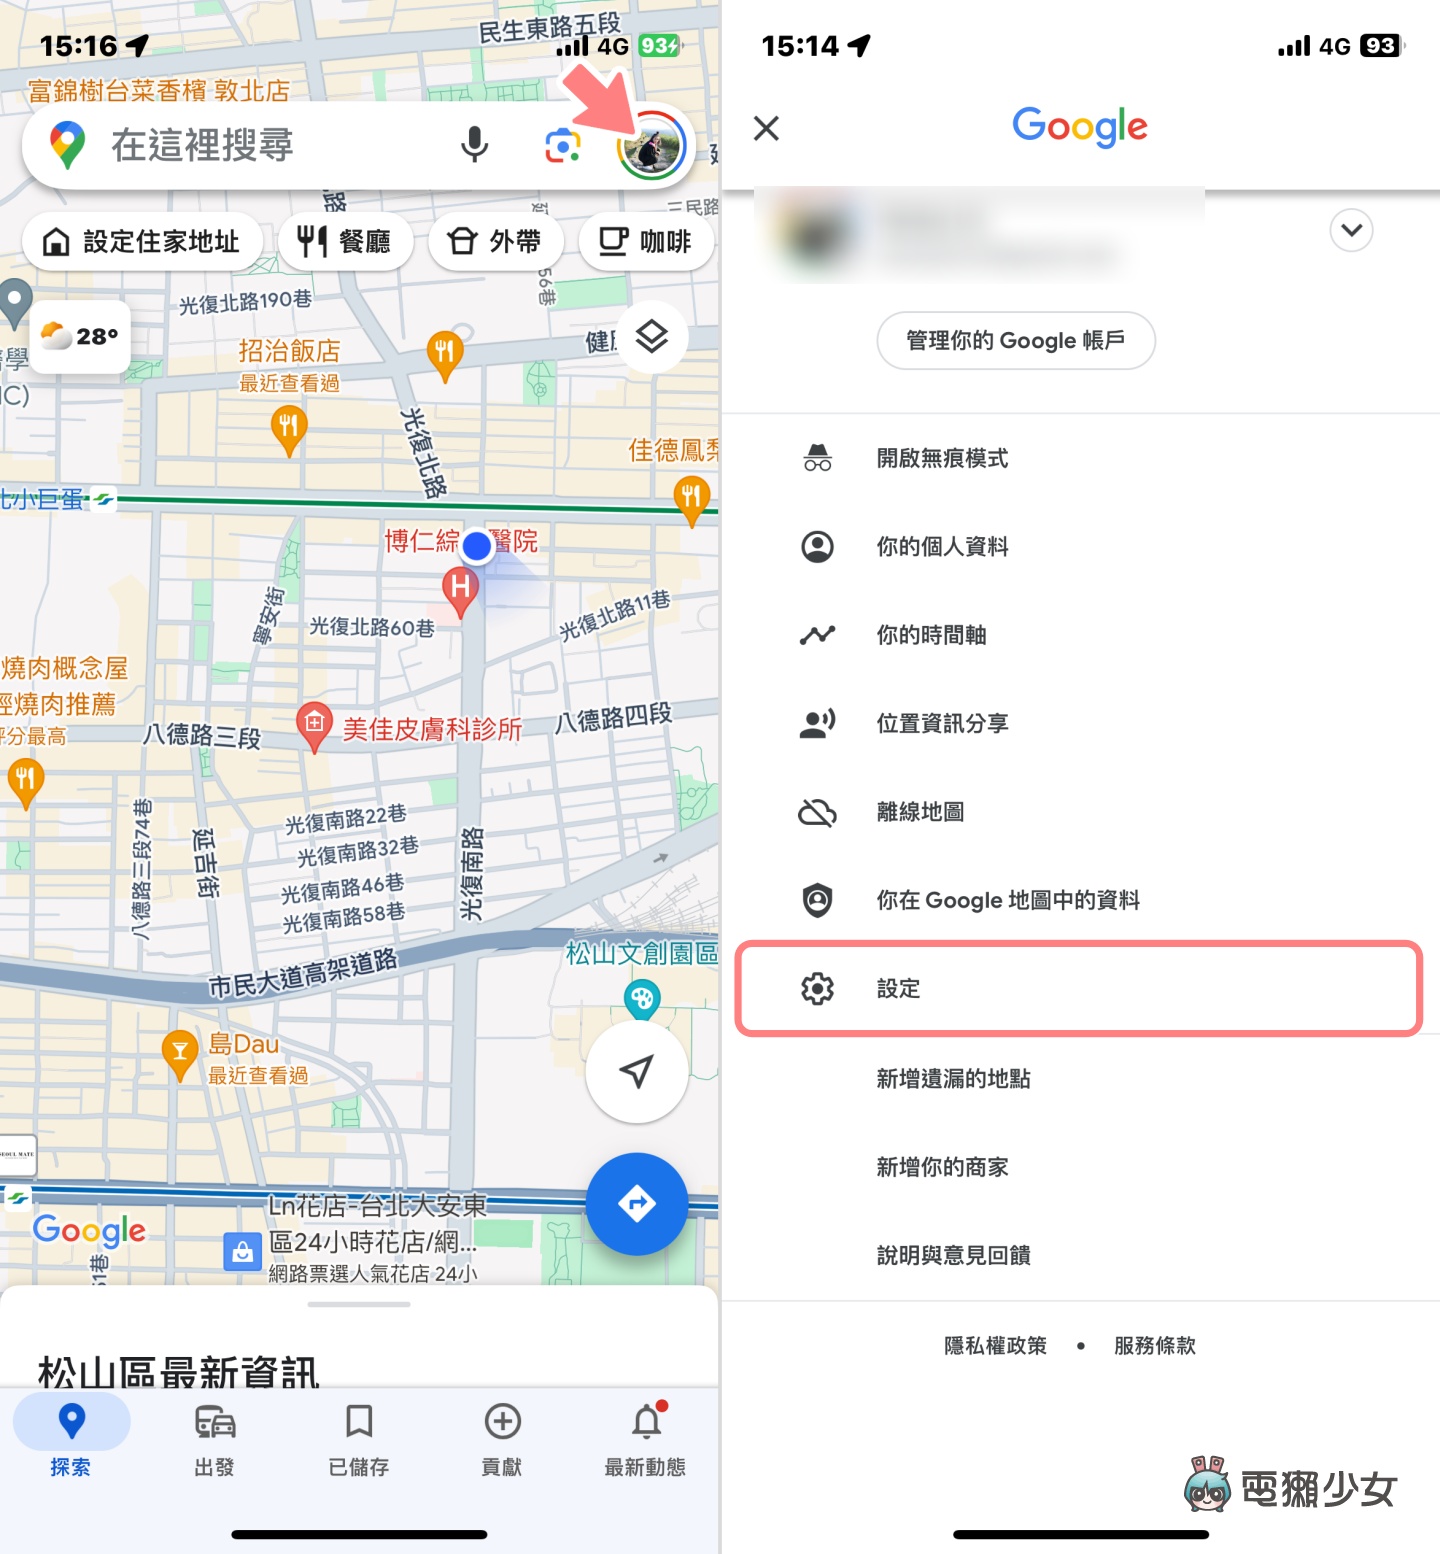 Google Maps 新功能『 導航路線快覽 』上線！看地圖找路更方便